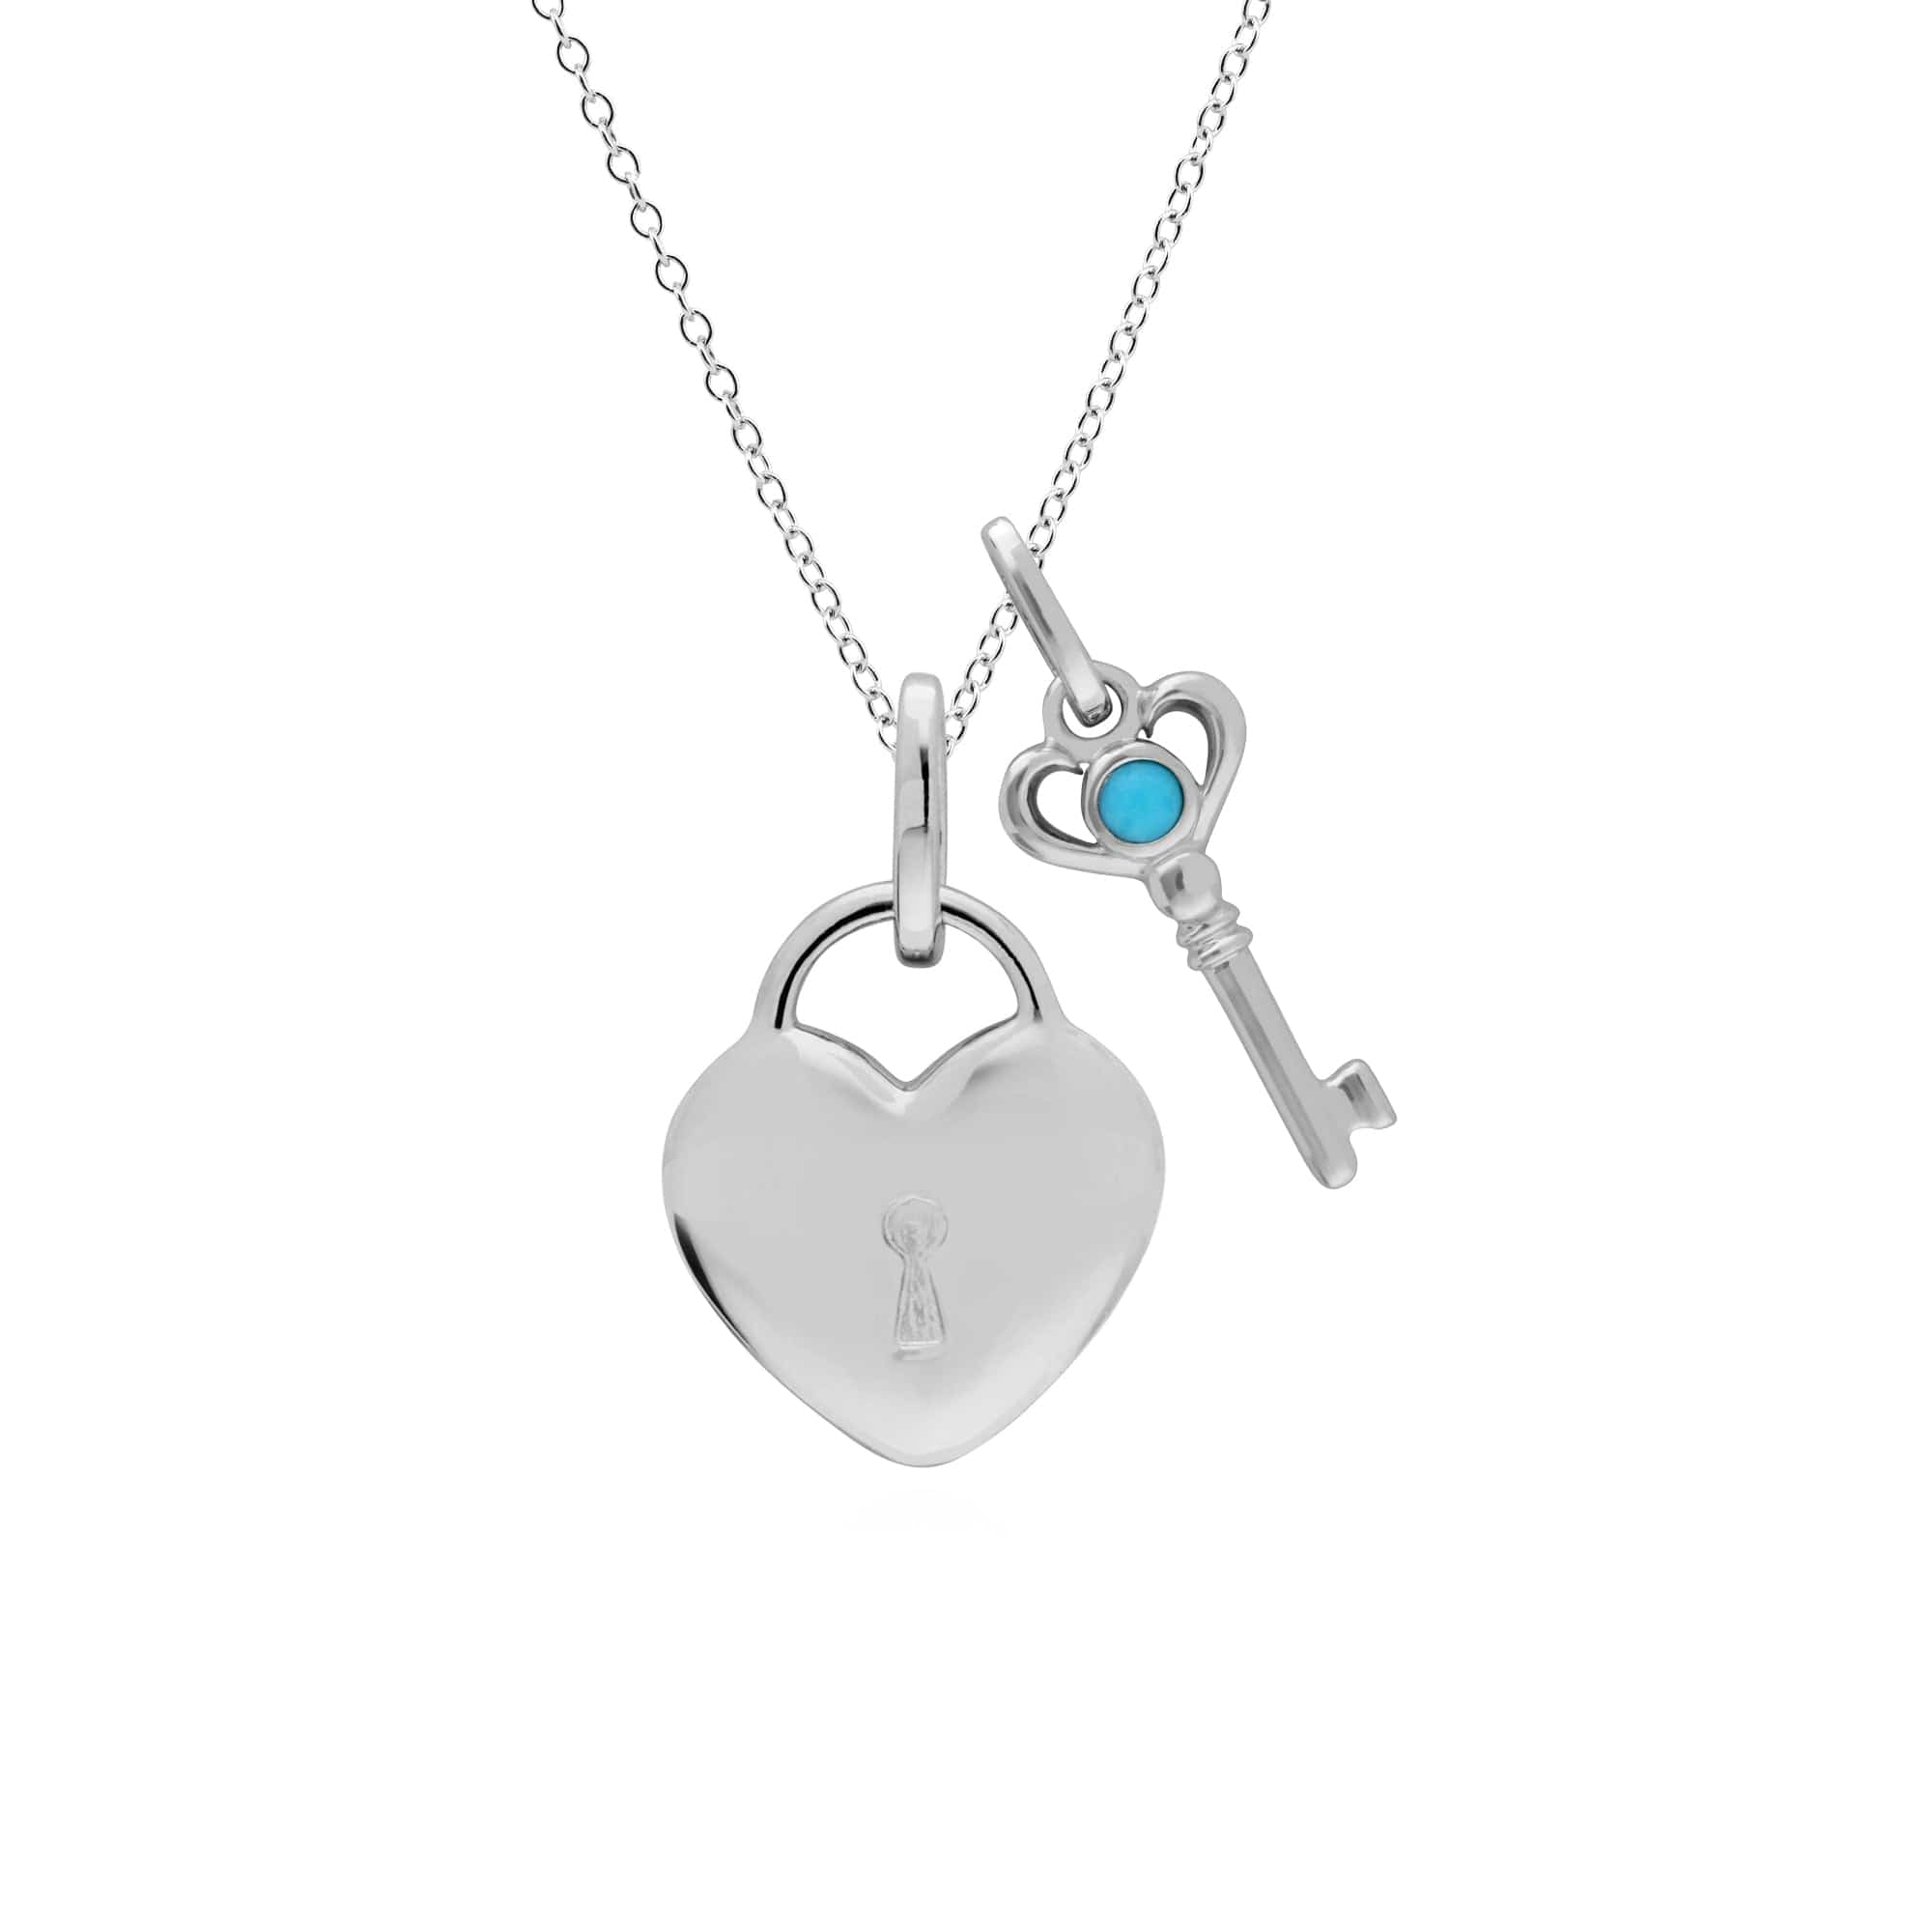 Classic Heart Lock Pendant & Turquoise Key Charm Image 1